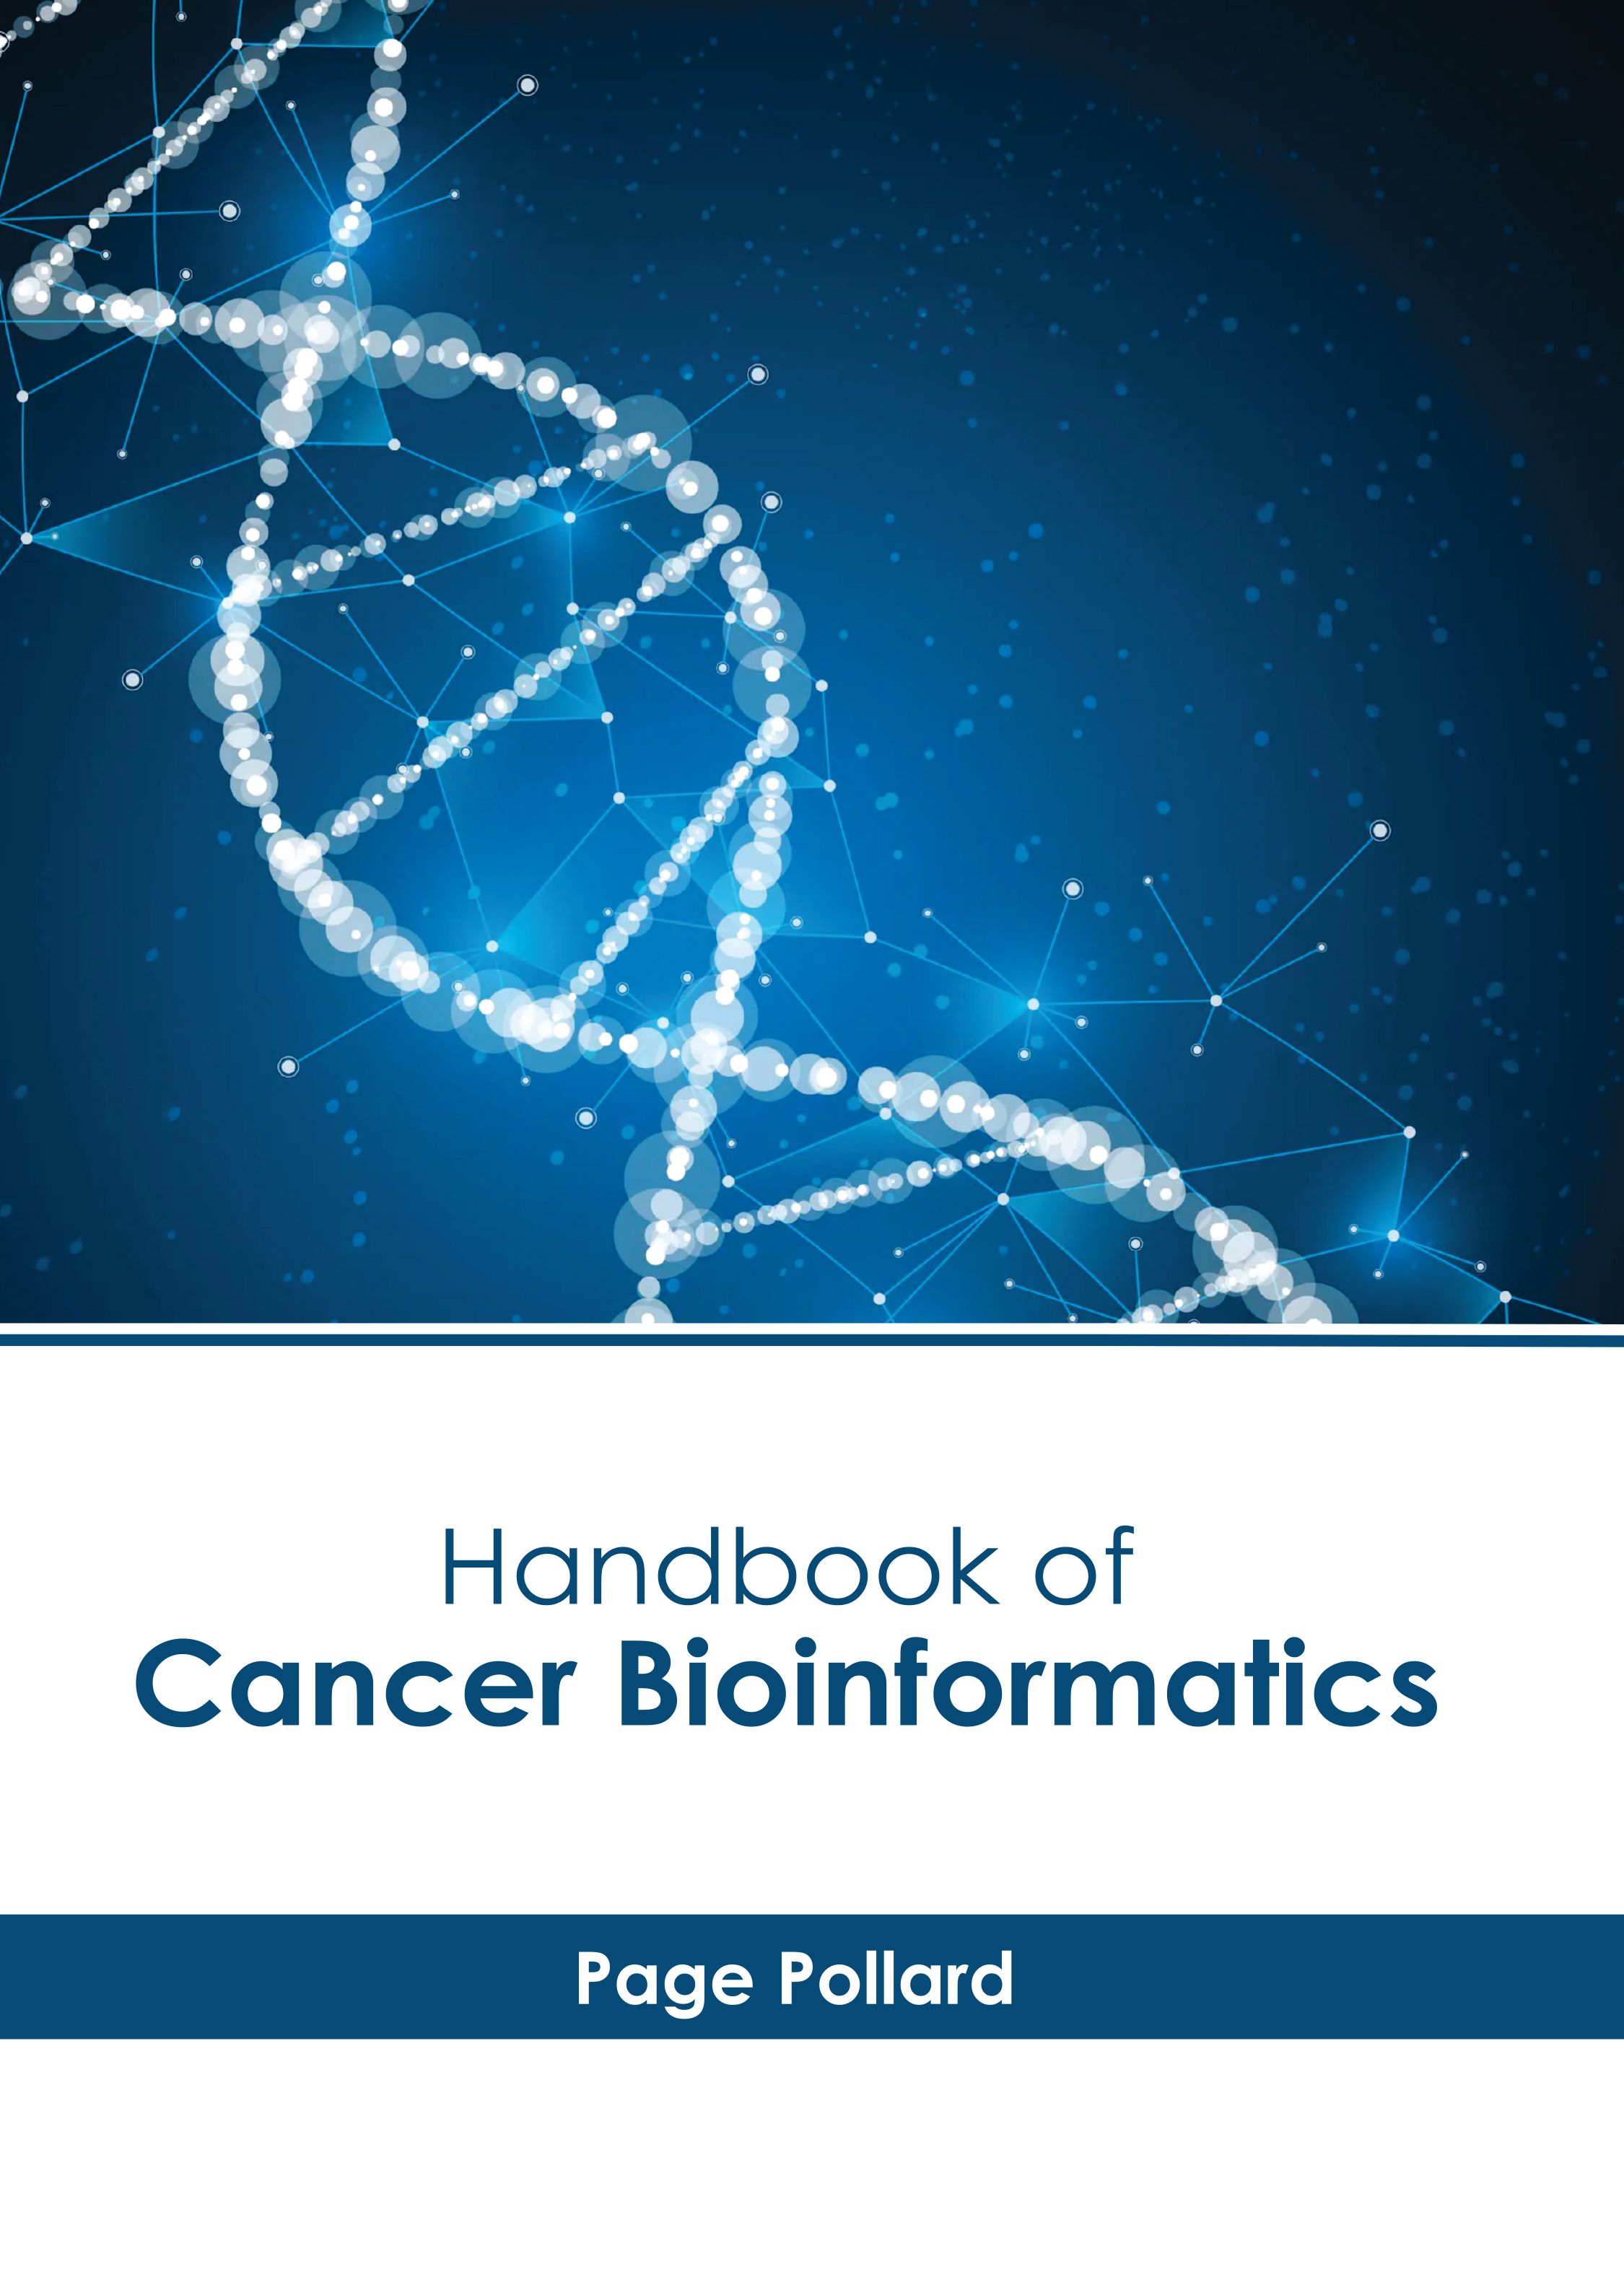 HANDBOOK OF CANCER BIOINFORMATICS